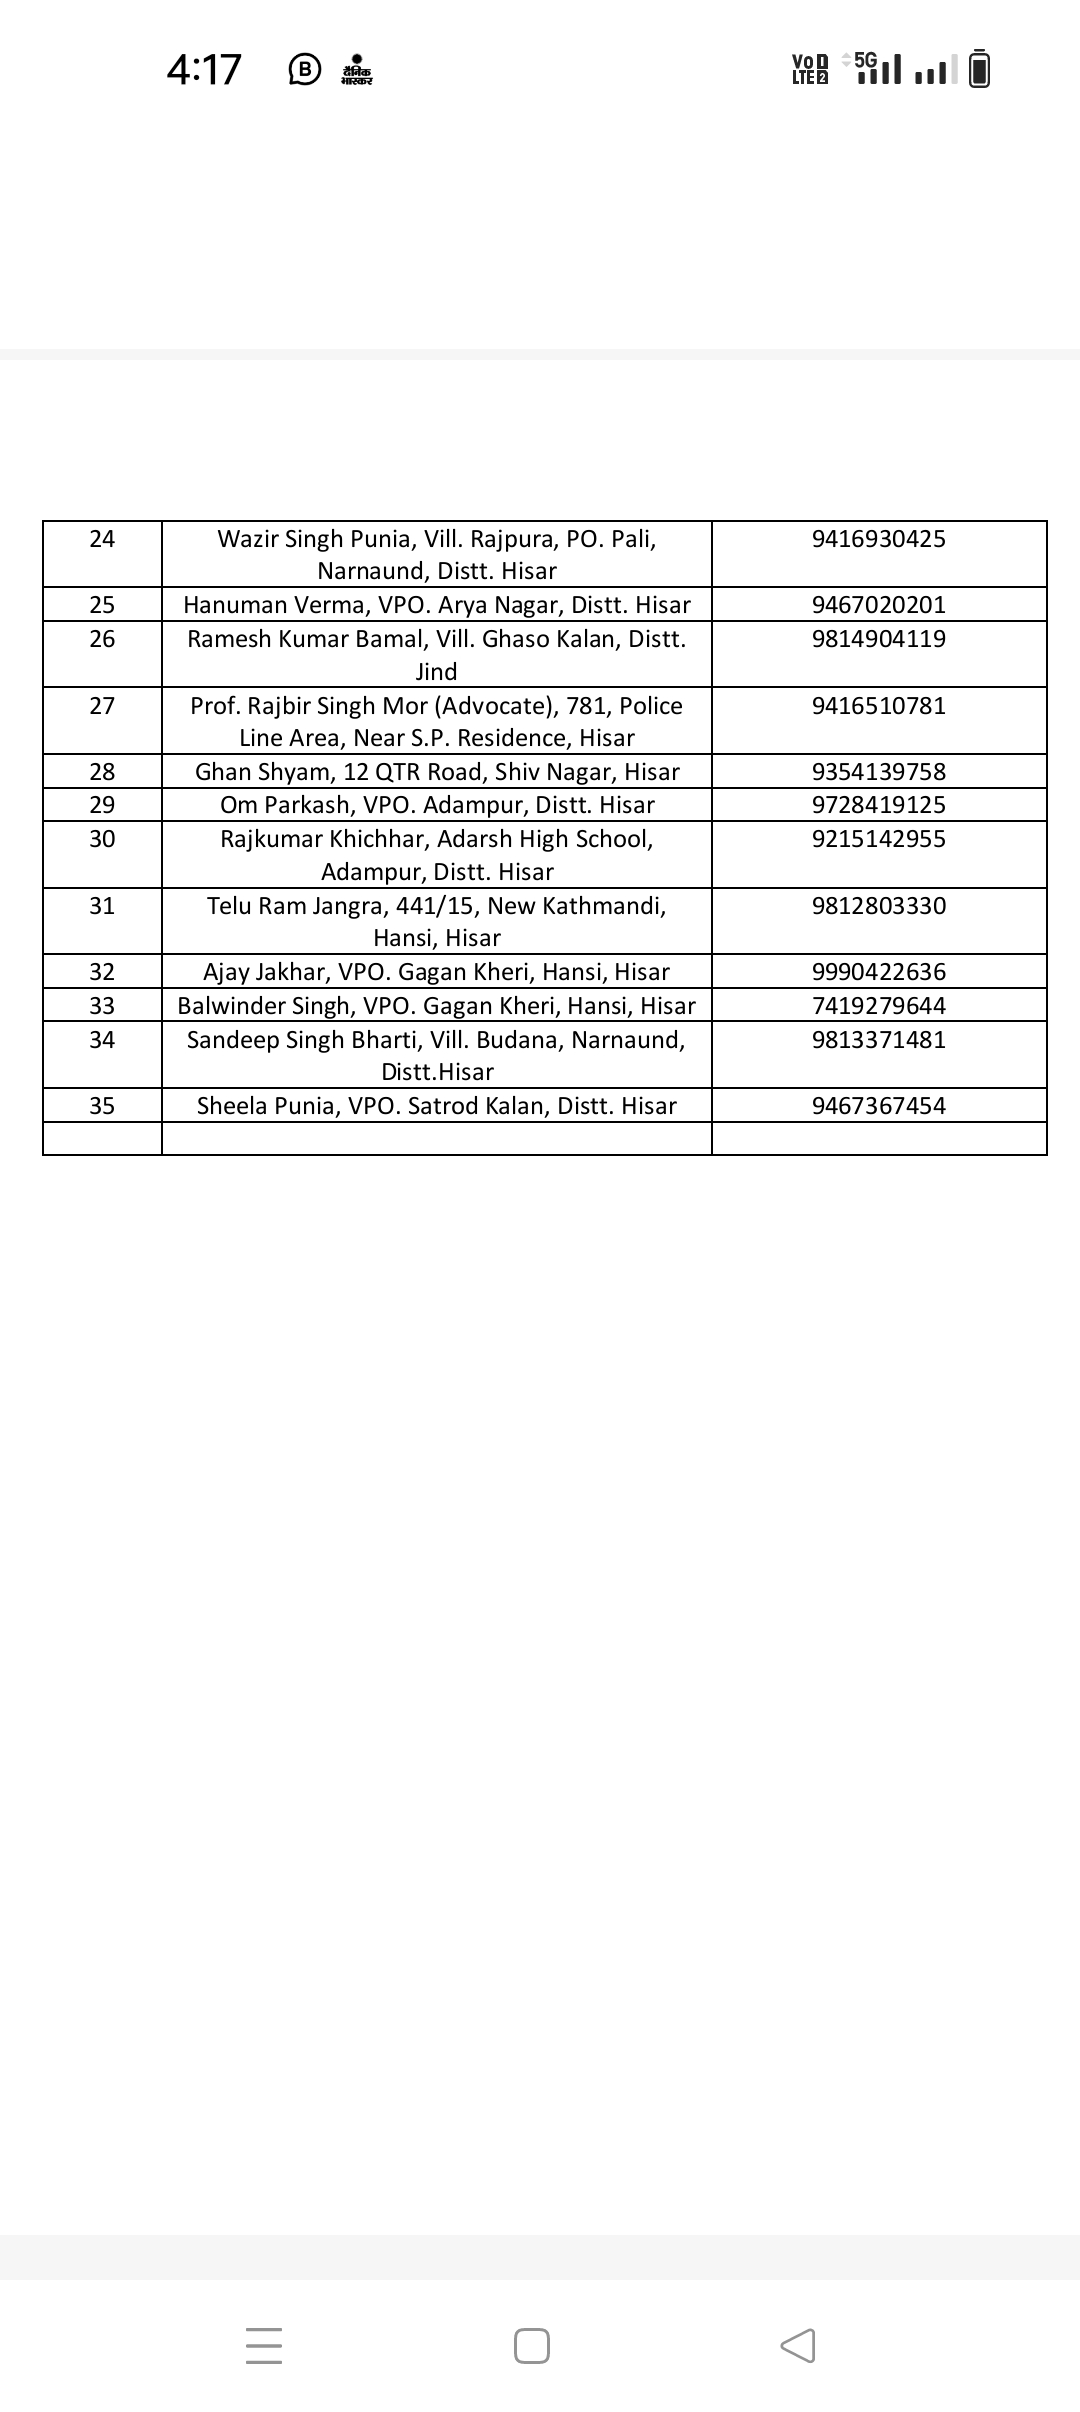 Hisar loksabha: Many leaders including former minister JP applied for tickets on Hisar Lok Sabha seat, see full list.